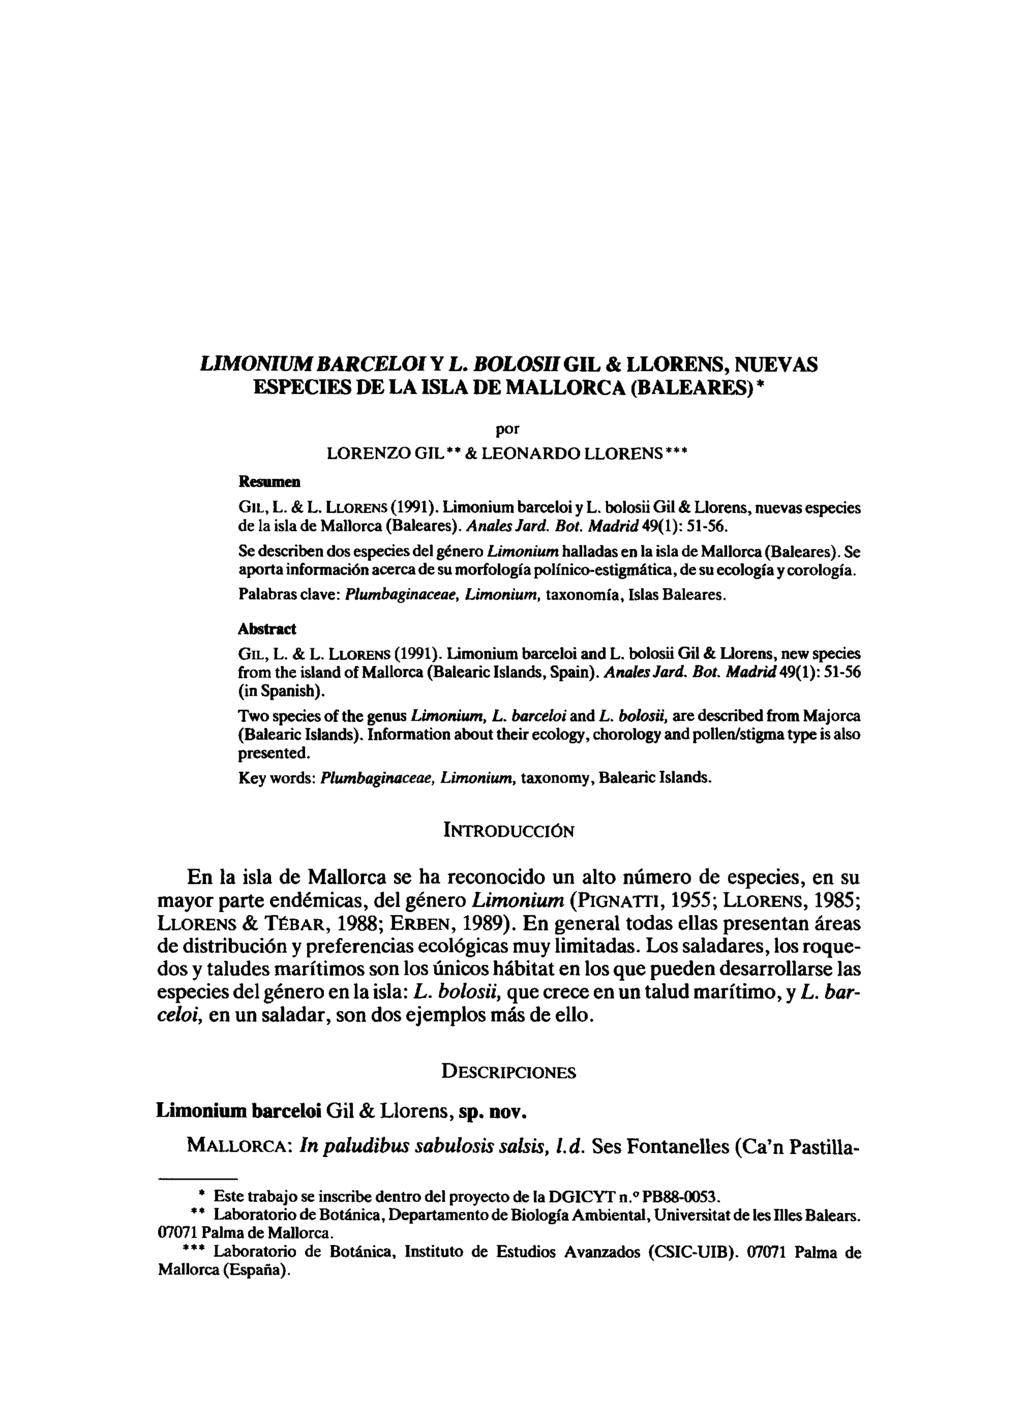 LIMONIUM BARCELOI \ L. BOLOSII GIL & LLORENS, NUEVAS ESPECIES DE LA ISLA DE MALLORCA (BALEARES) * Resumen por LORENZO GIL" & LEONARDO LLORENS *** GIL, L. & L. LLORENS (1991). Limonium barceloi y L.